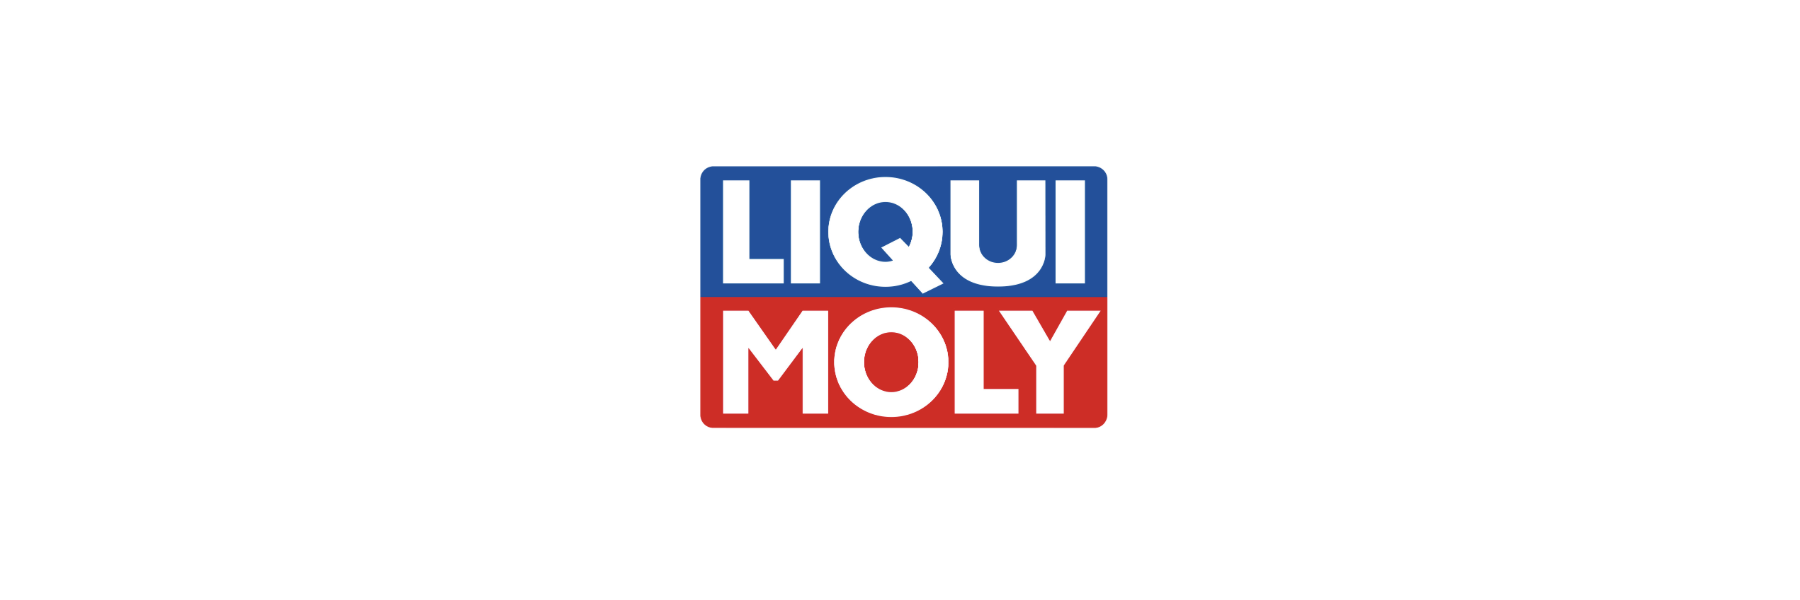 Liqui Moly

Im Automobilbereich ist LIQUI MOLY...